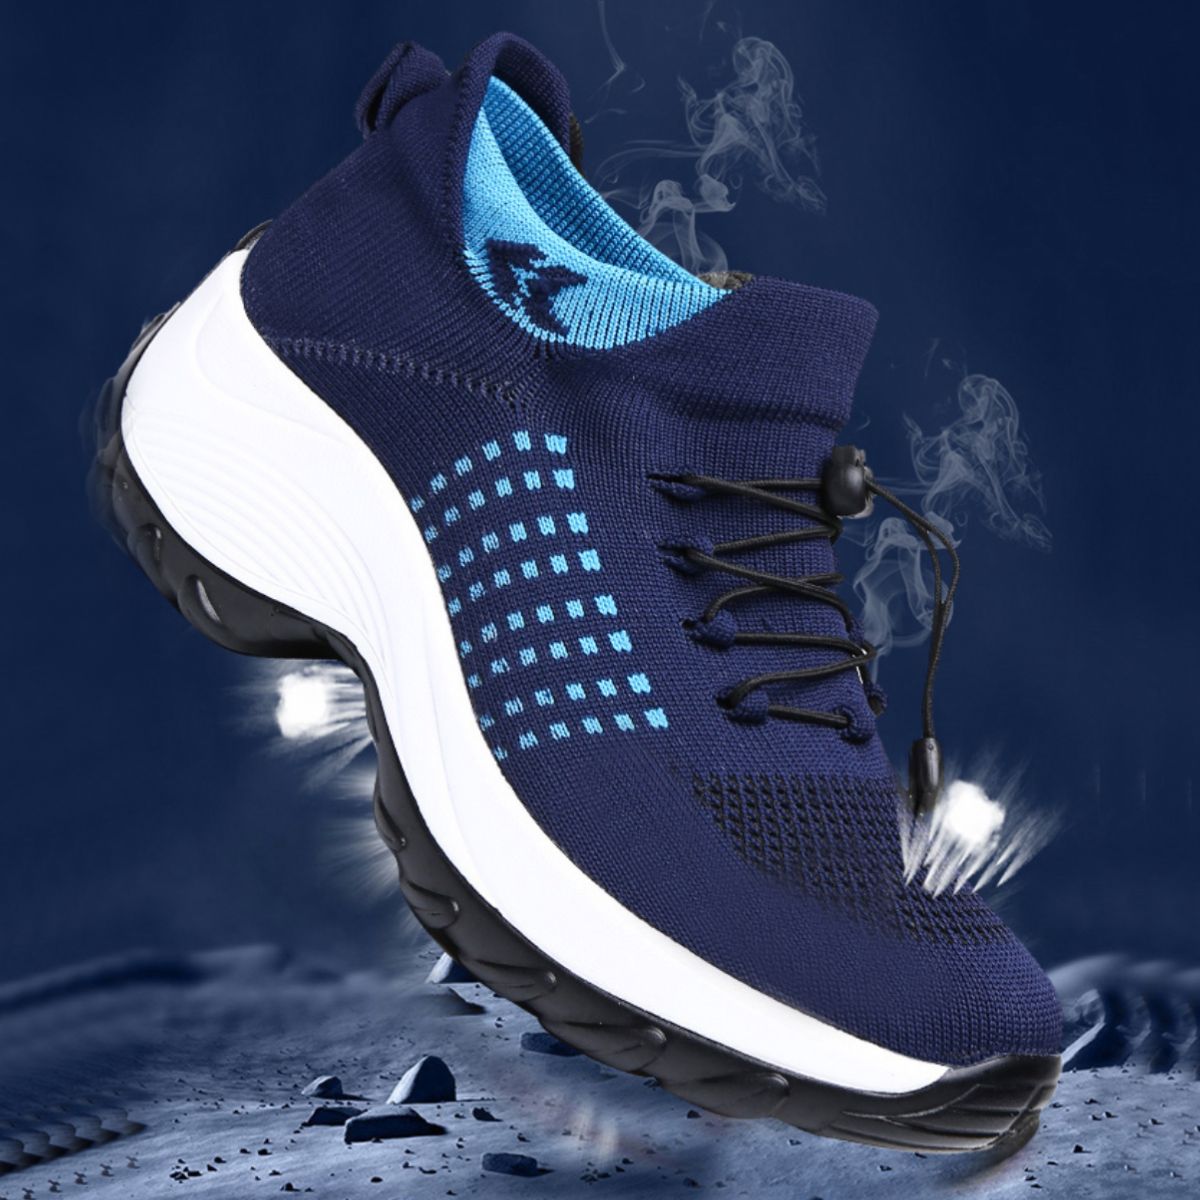 ComforthoFit Cloud Pro - Innovative Pain Relief Footwear